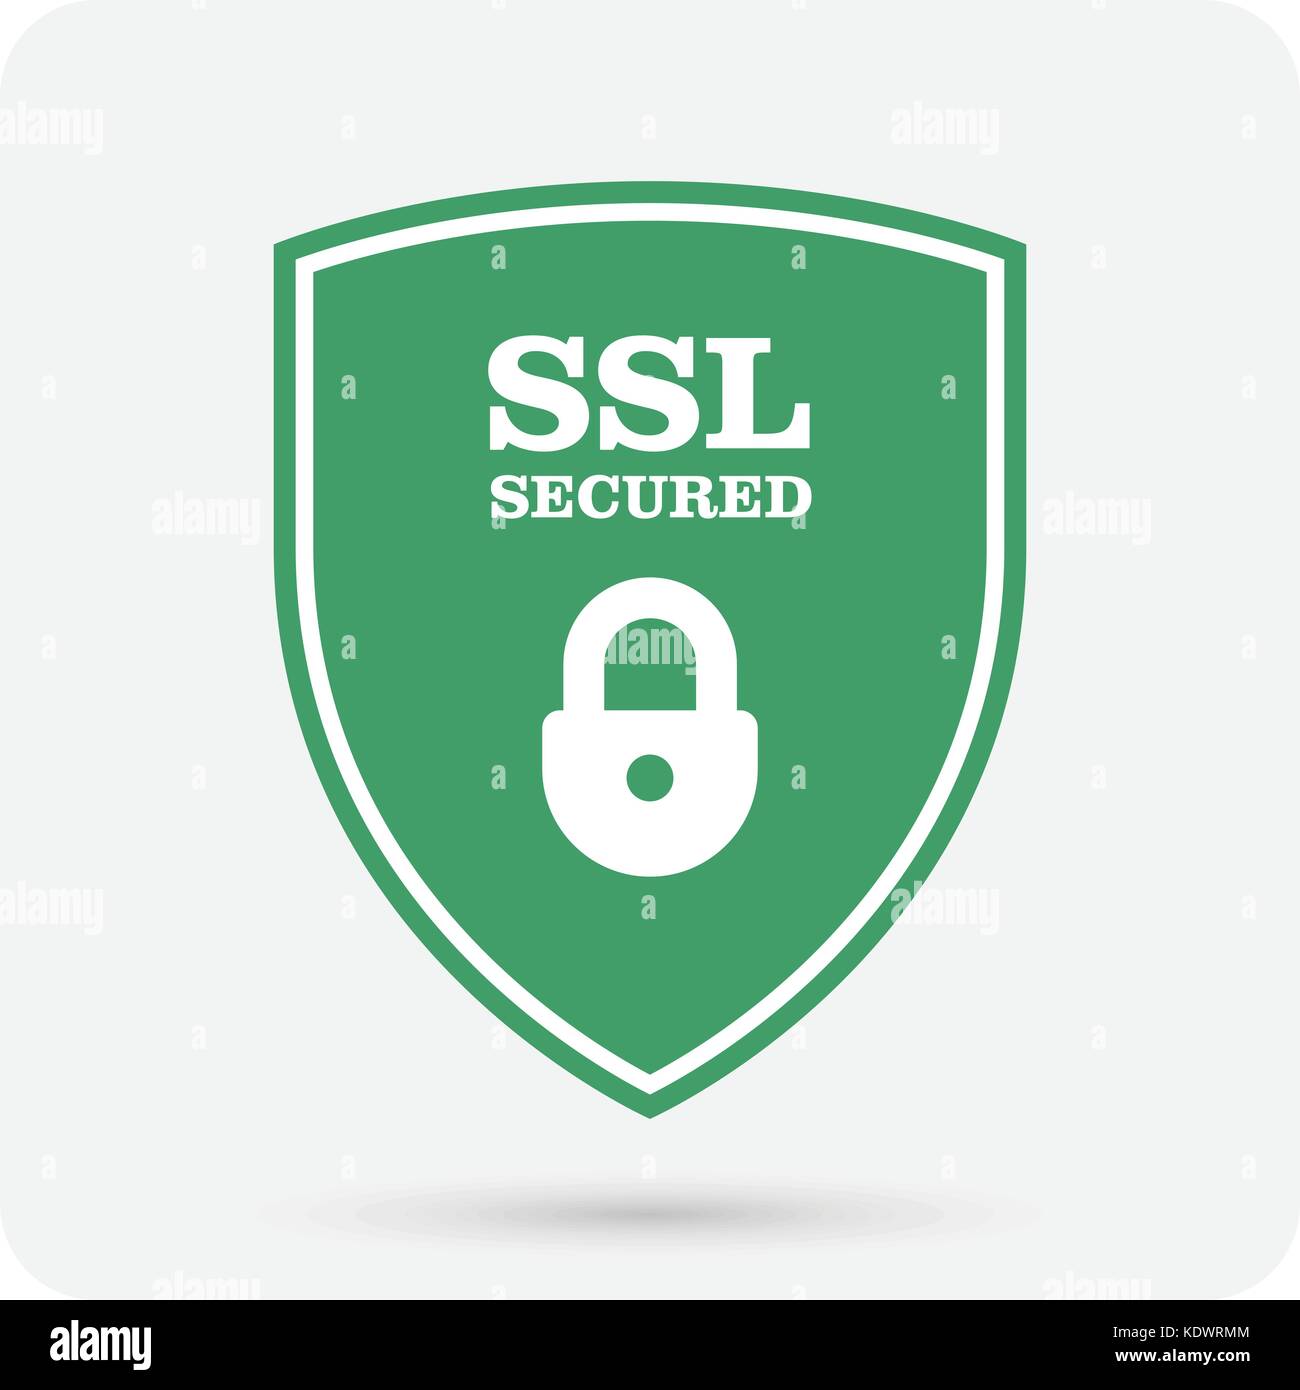 Ssl certificate shield with padlock - secure website emblem Stock Vector